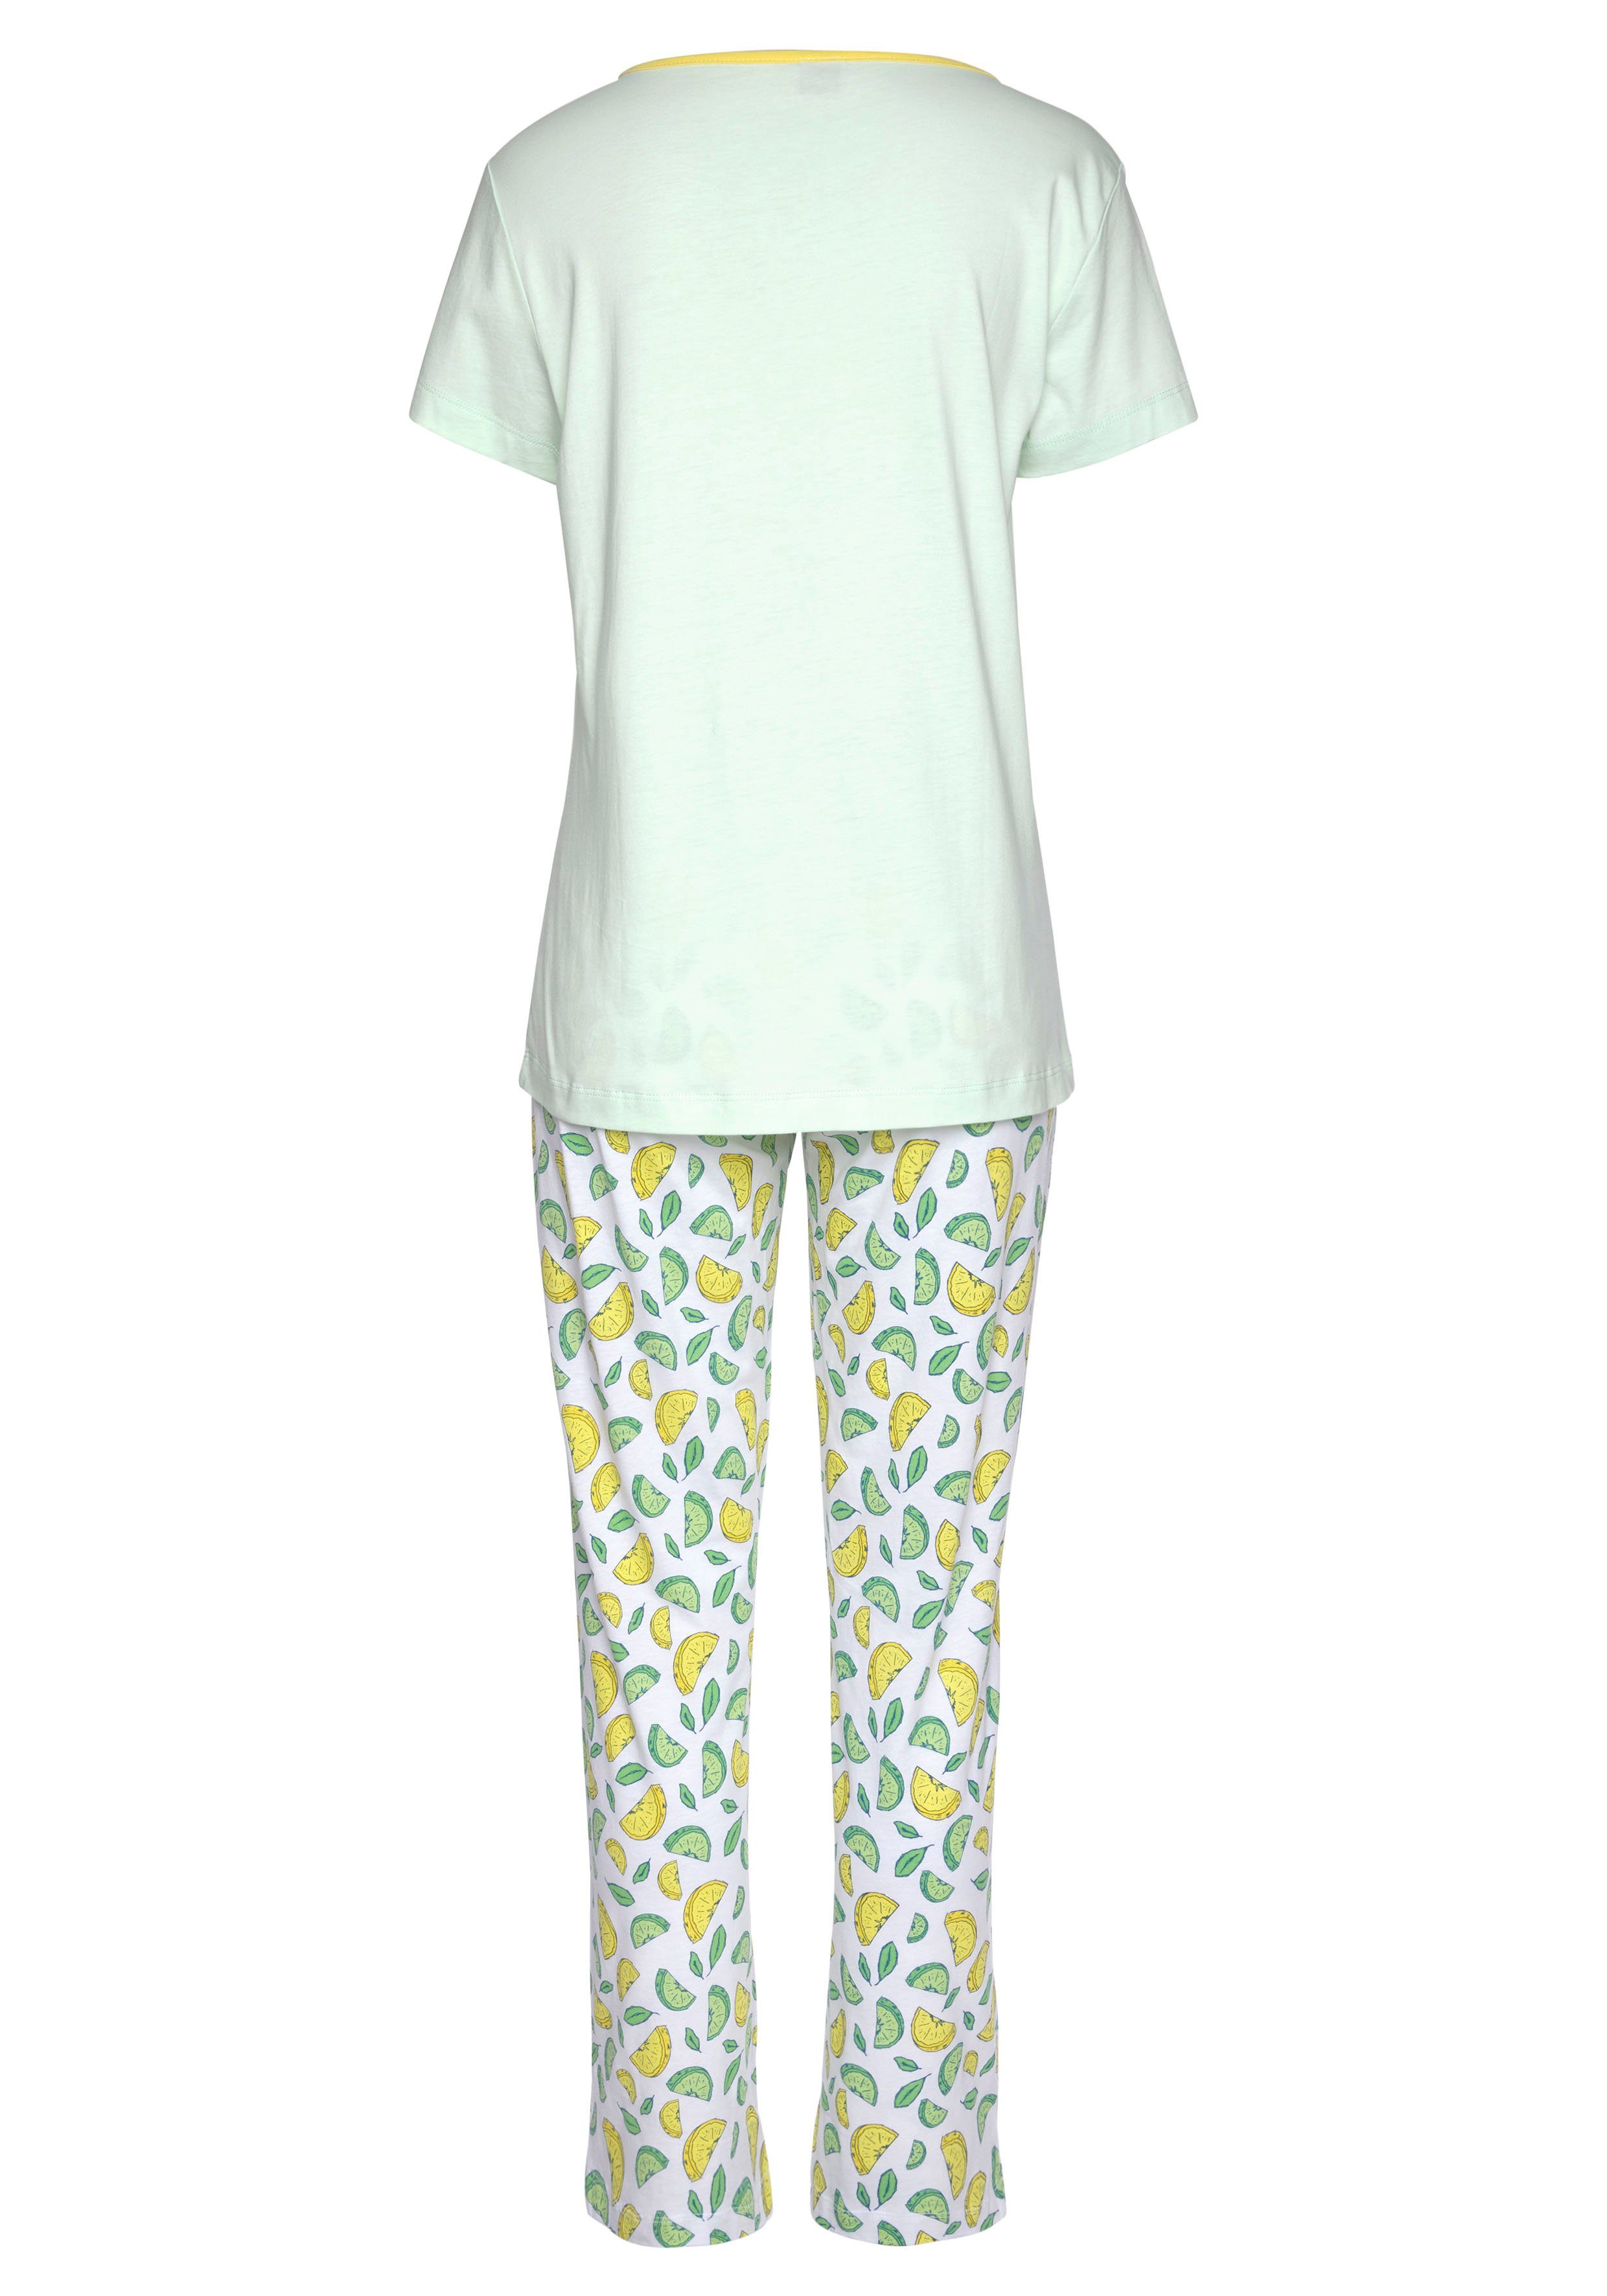 PEANUTS Pyjama (2 1 Stück) tlg., mit Snoopy-Print